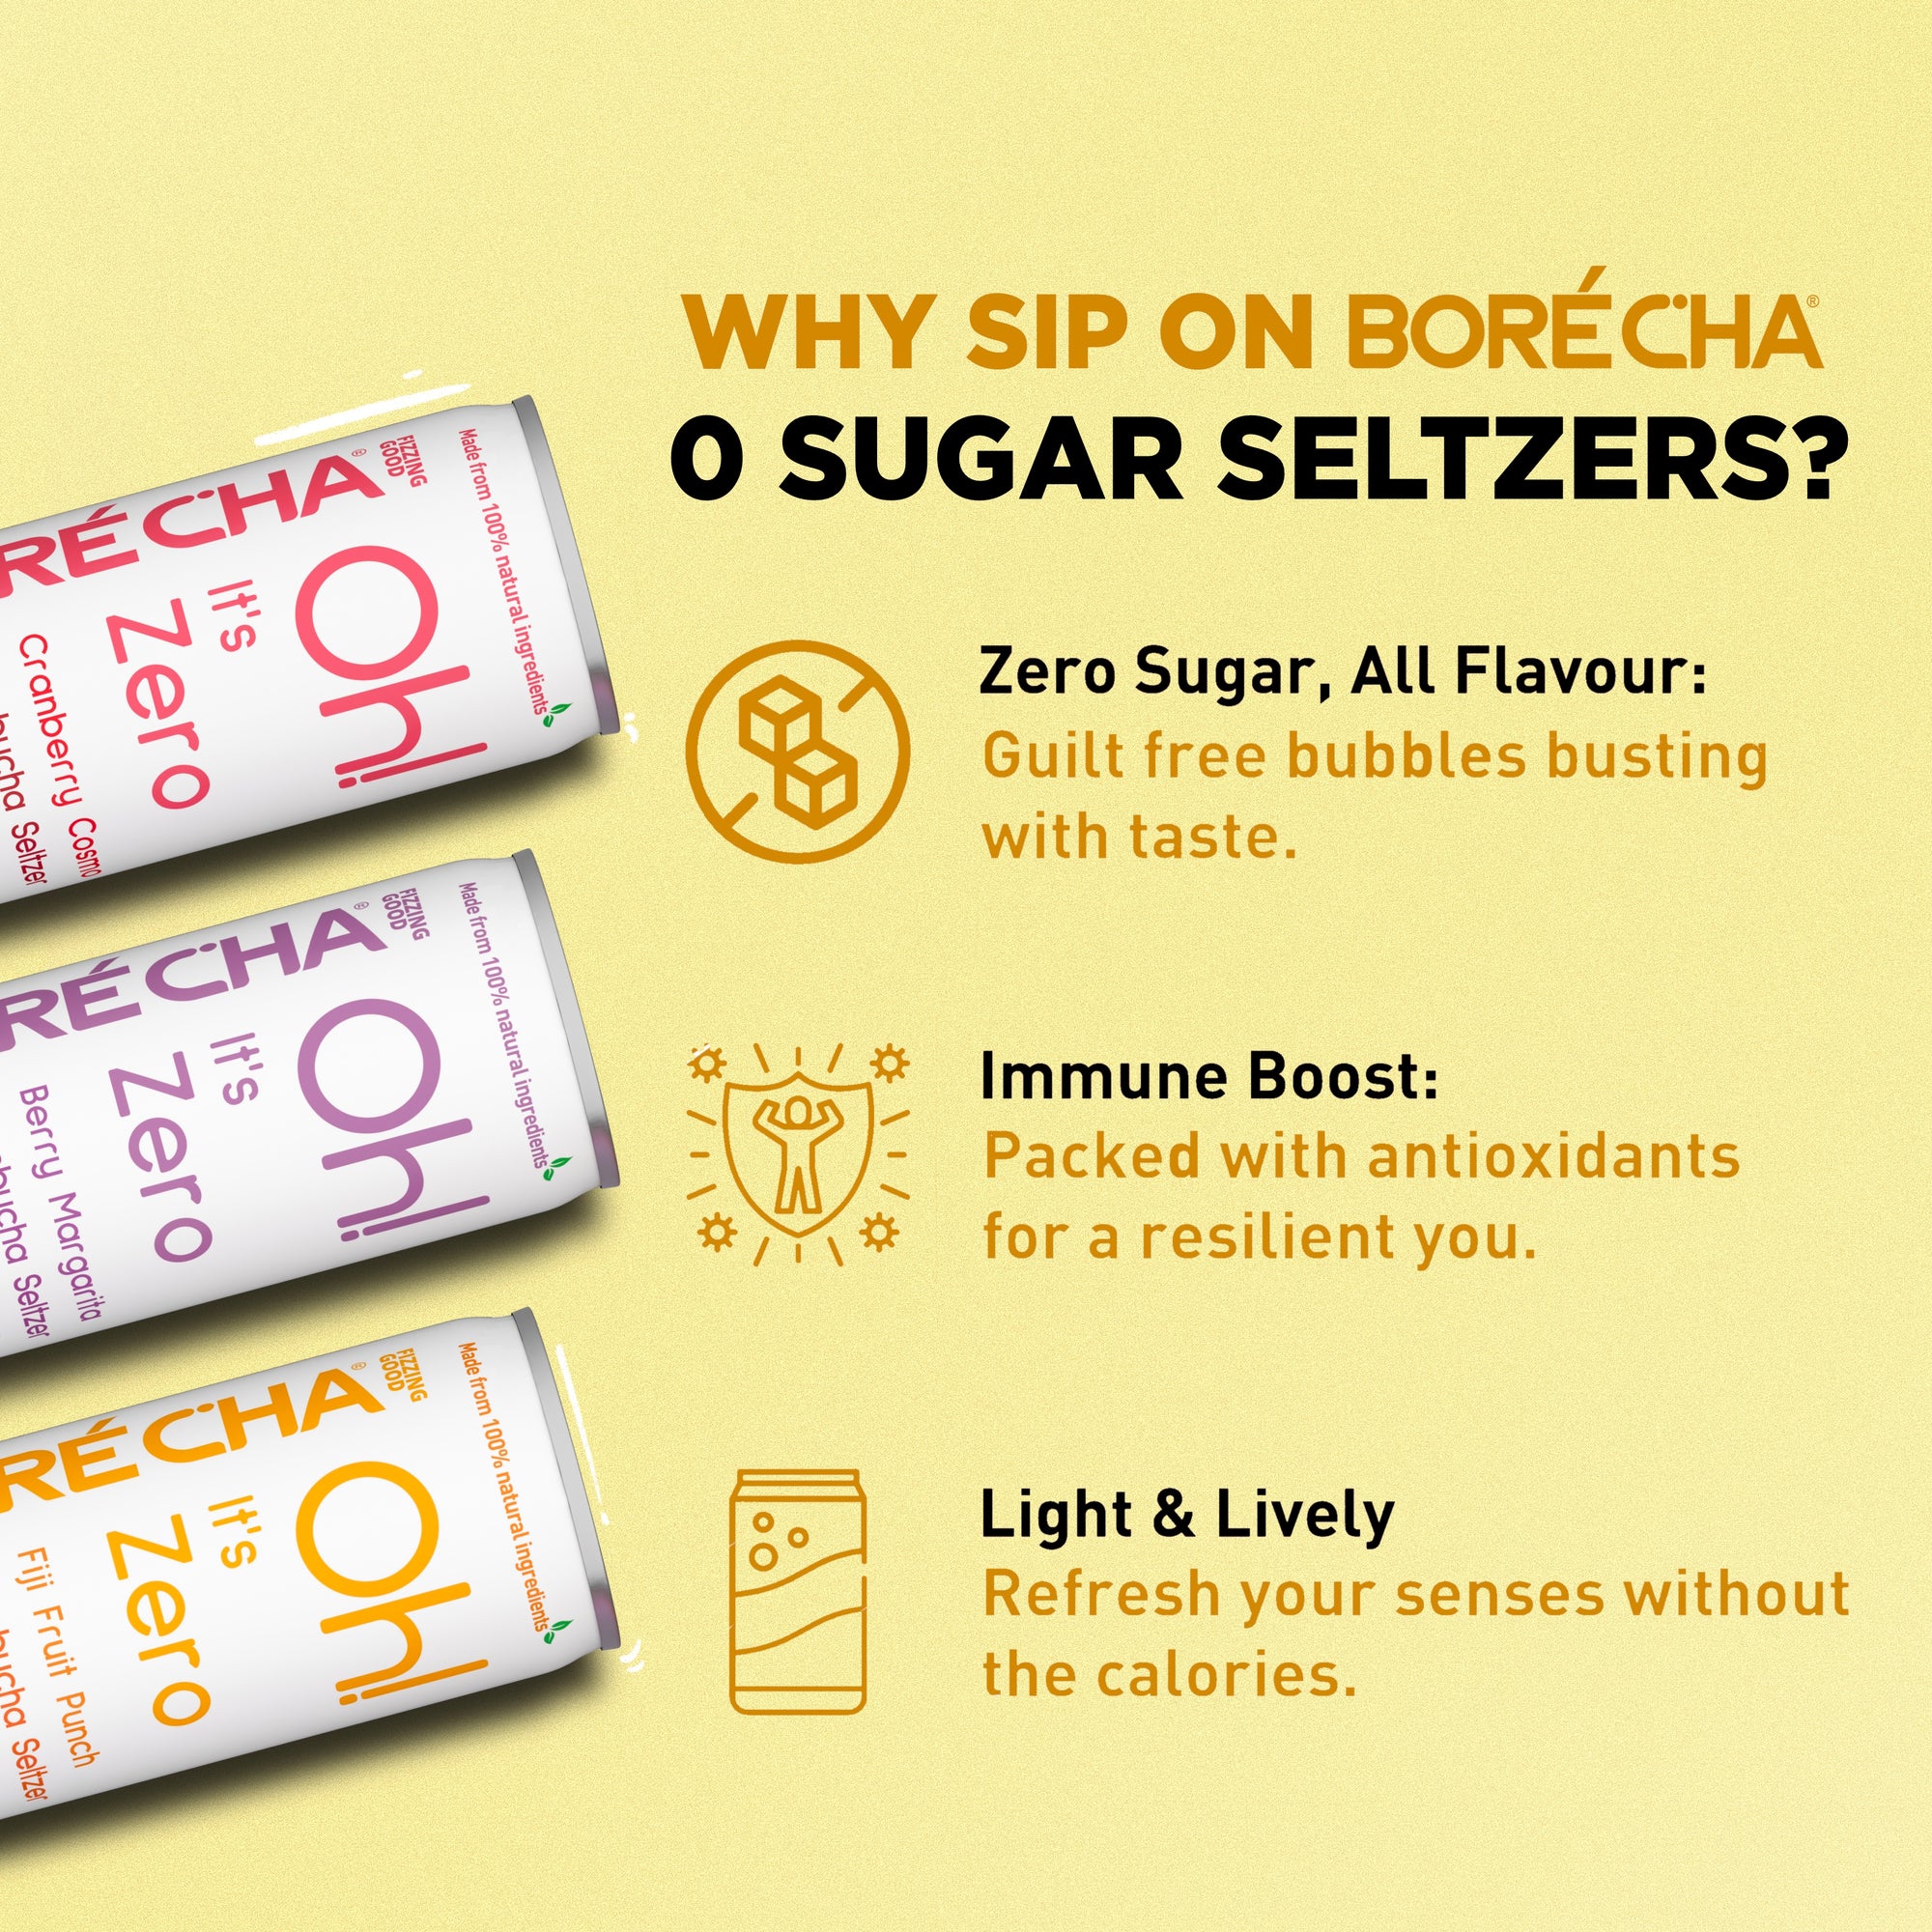 Oh! Zero Sugar Seltzer Trial Pack